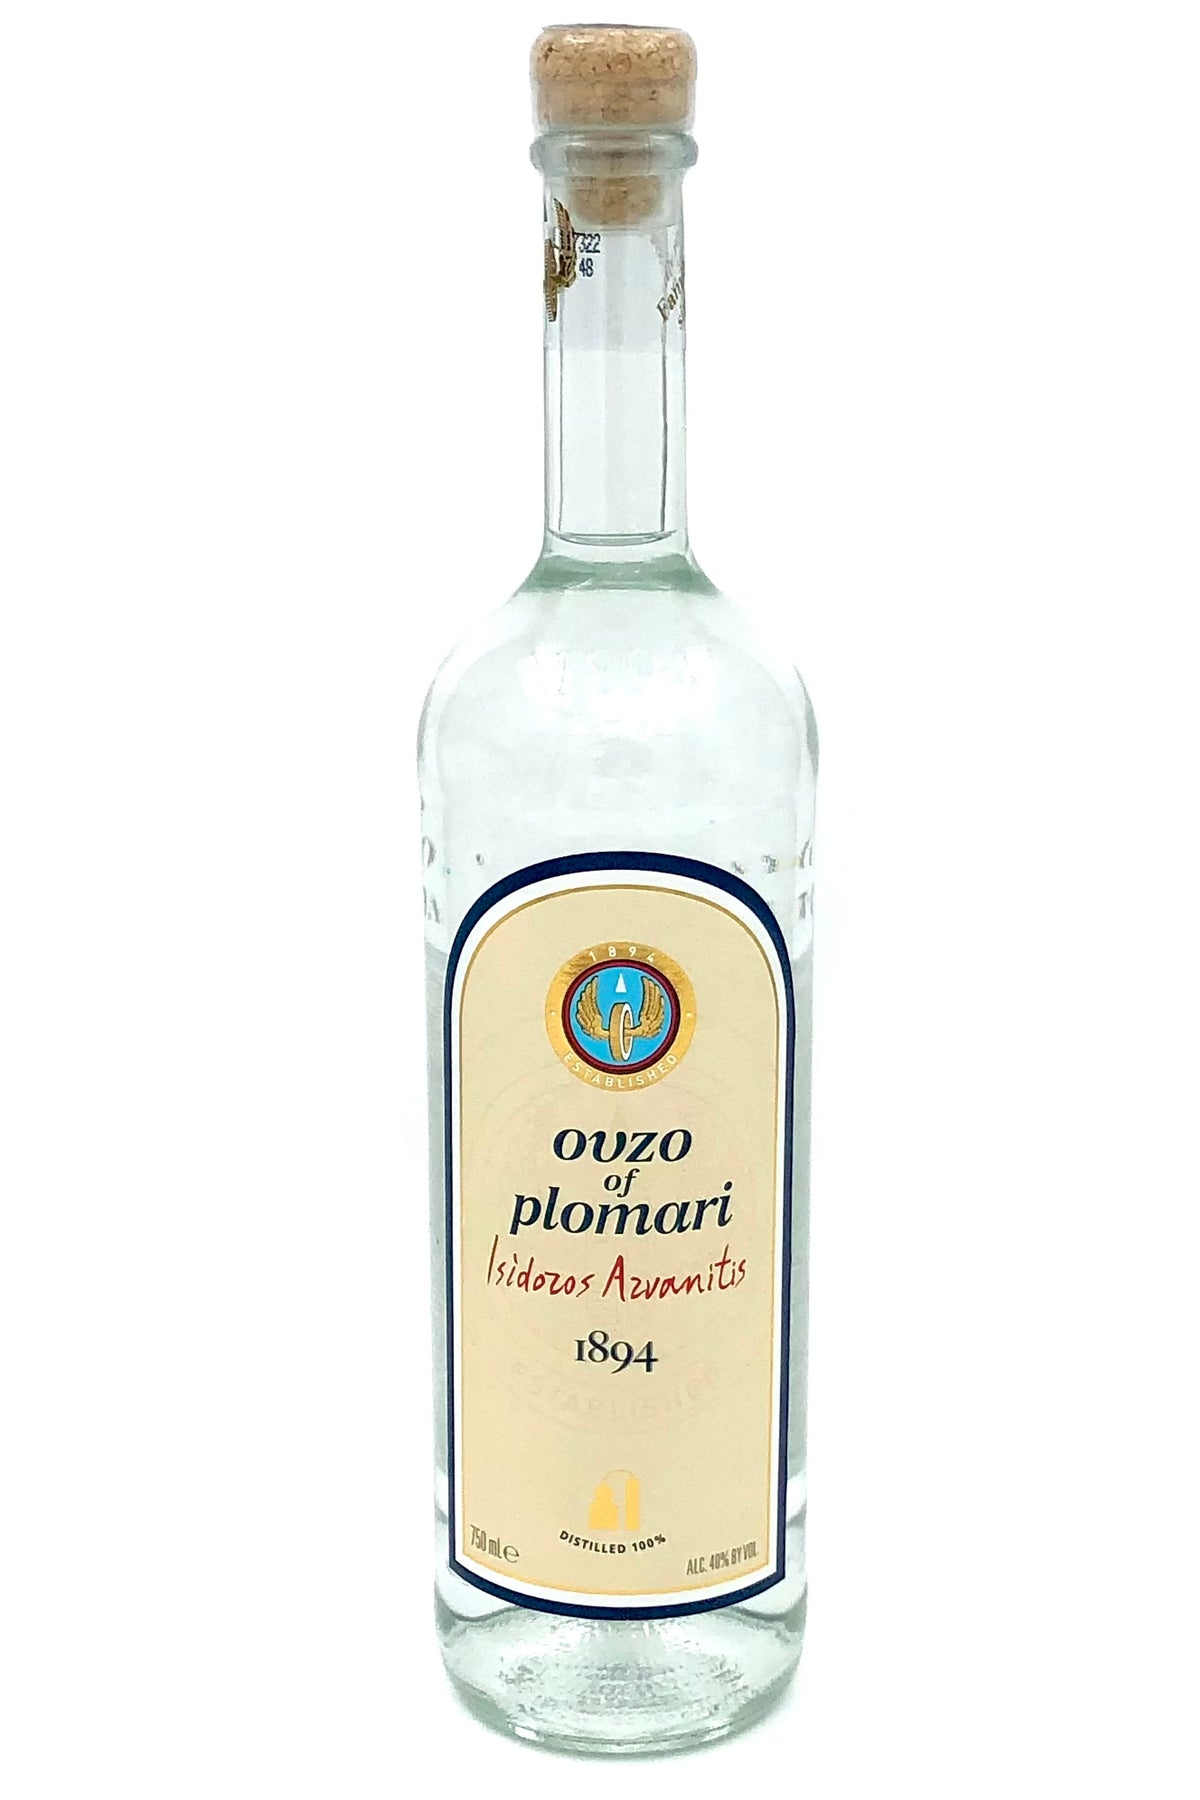 Buy Ouzo of Plomari 1894 Isidoros Arvanitis Online